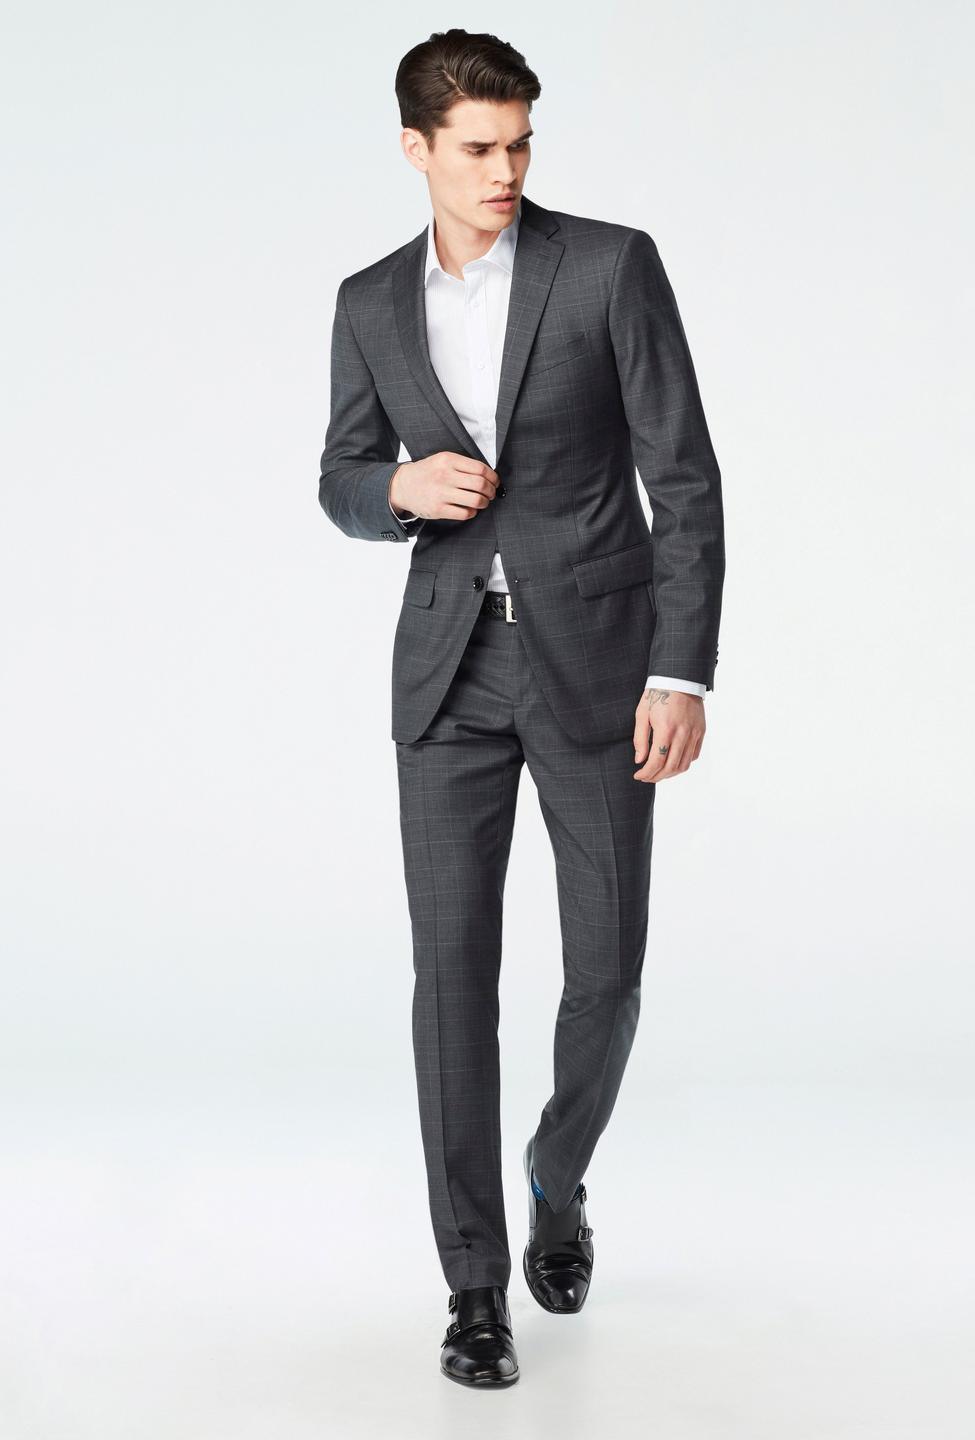 Gray blazer - Hemsworth Plaid Design from Premium Indochino Collection